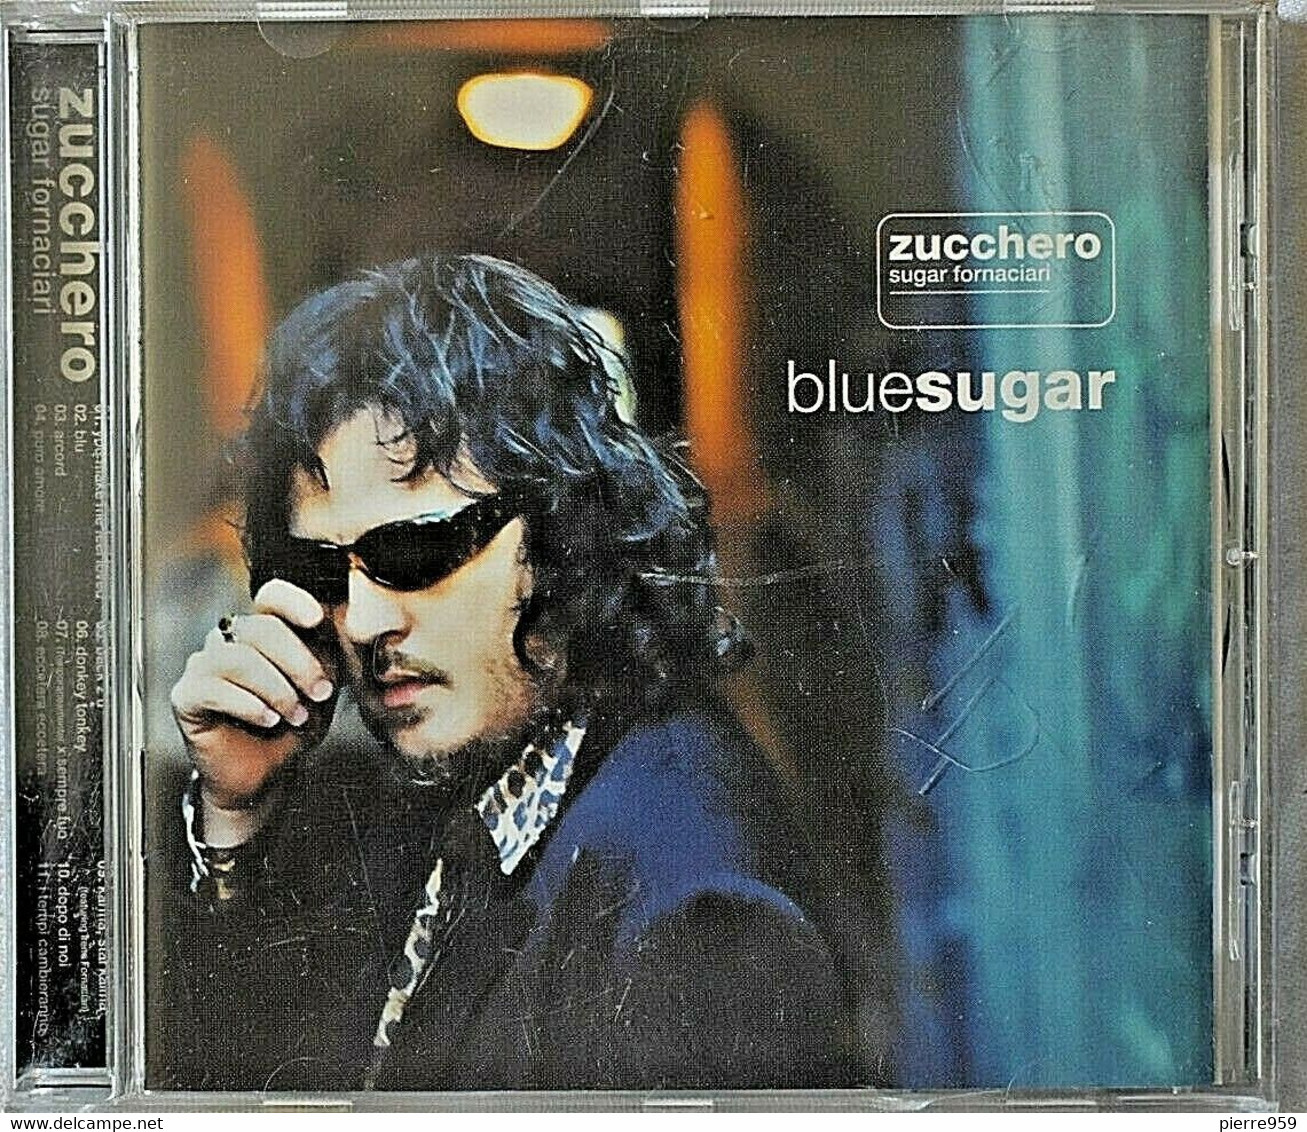 Zucchero - BlueSugar - Other - Italian Music